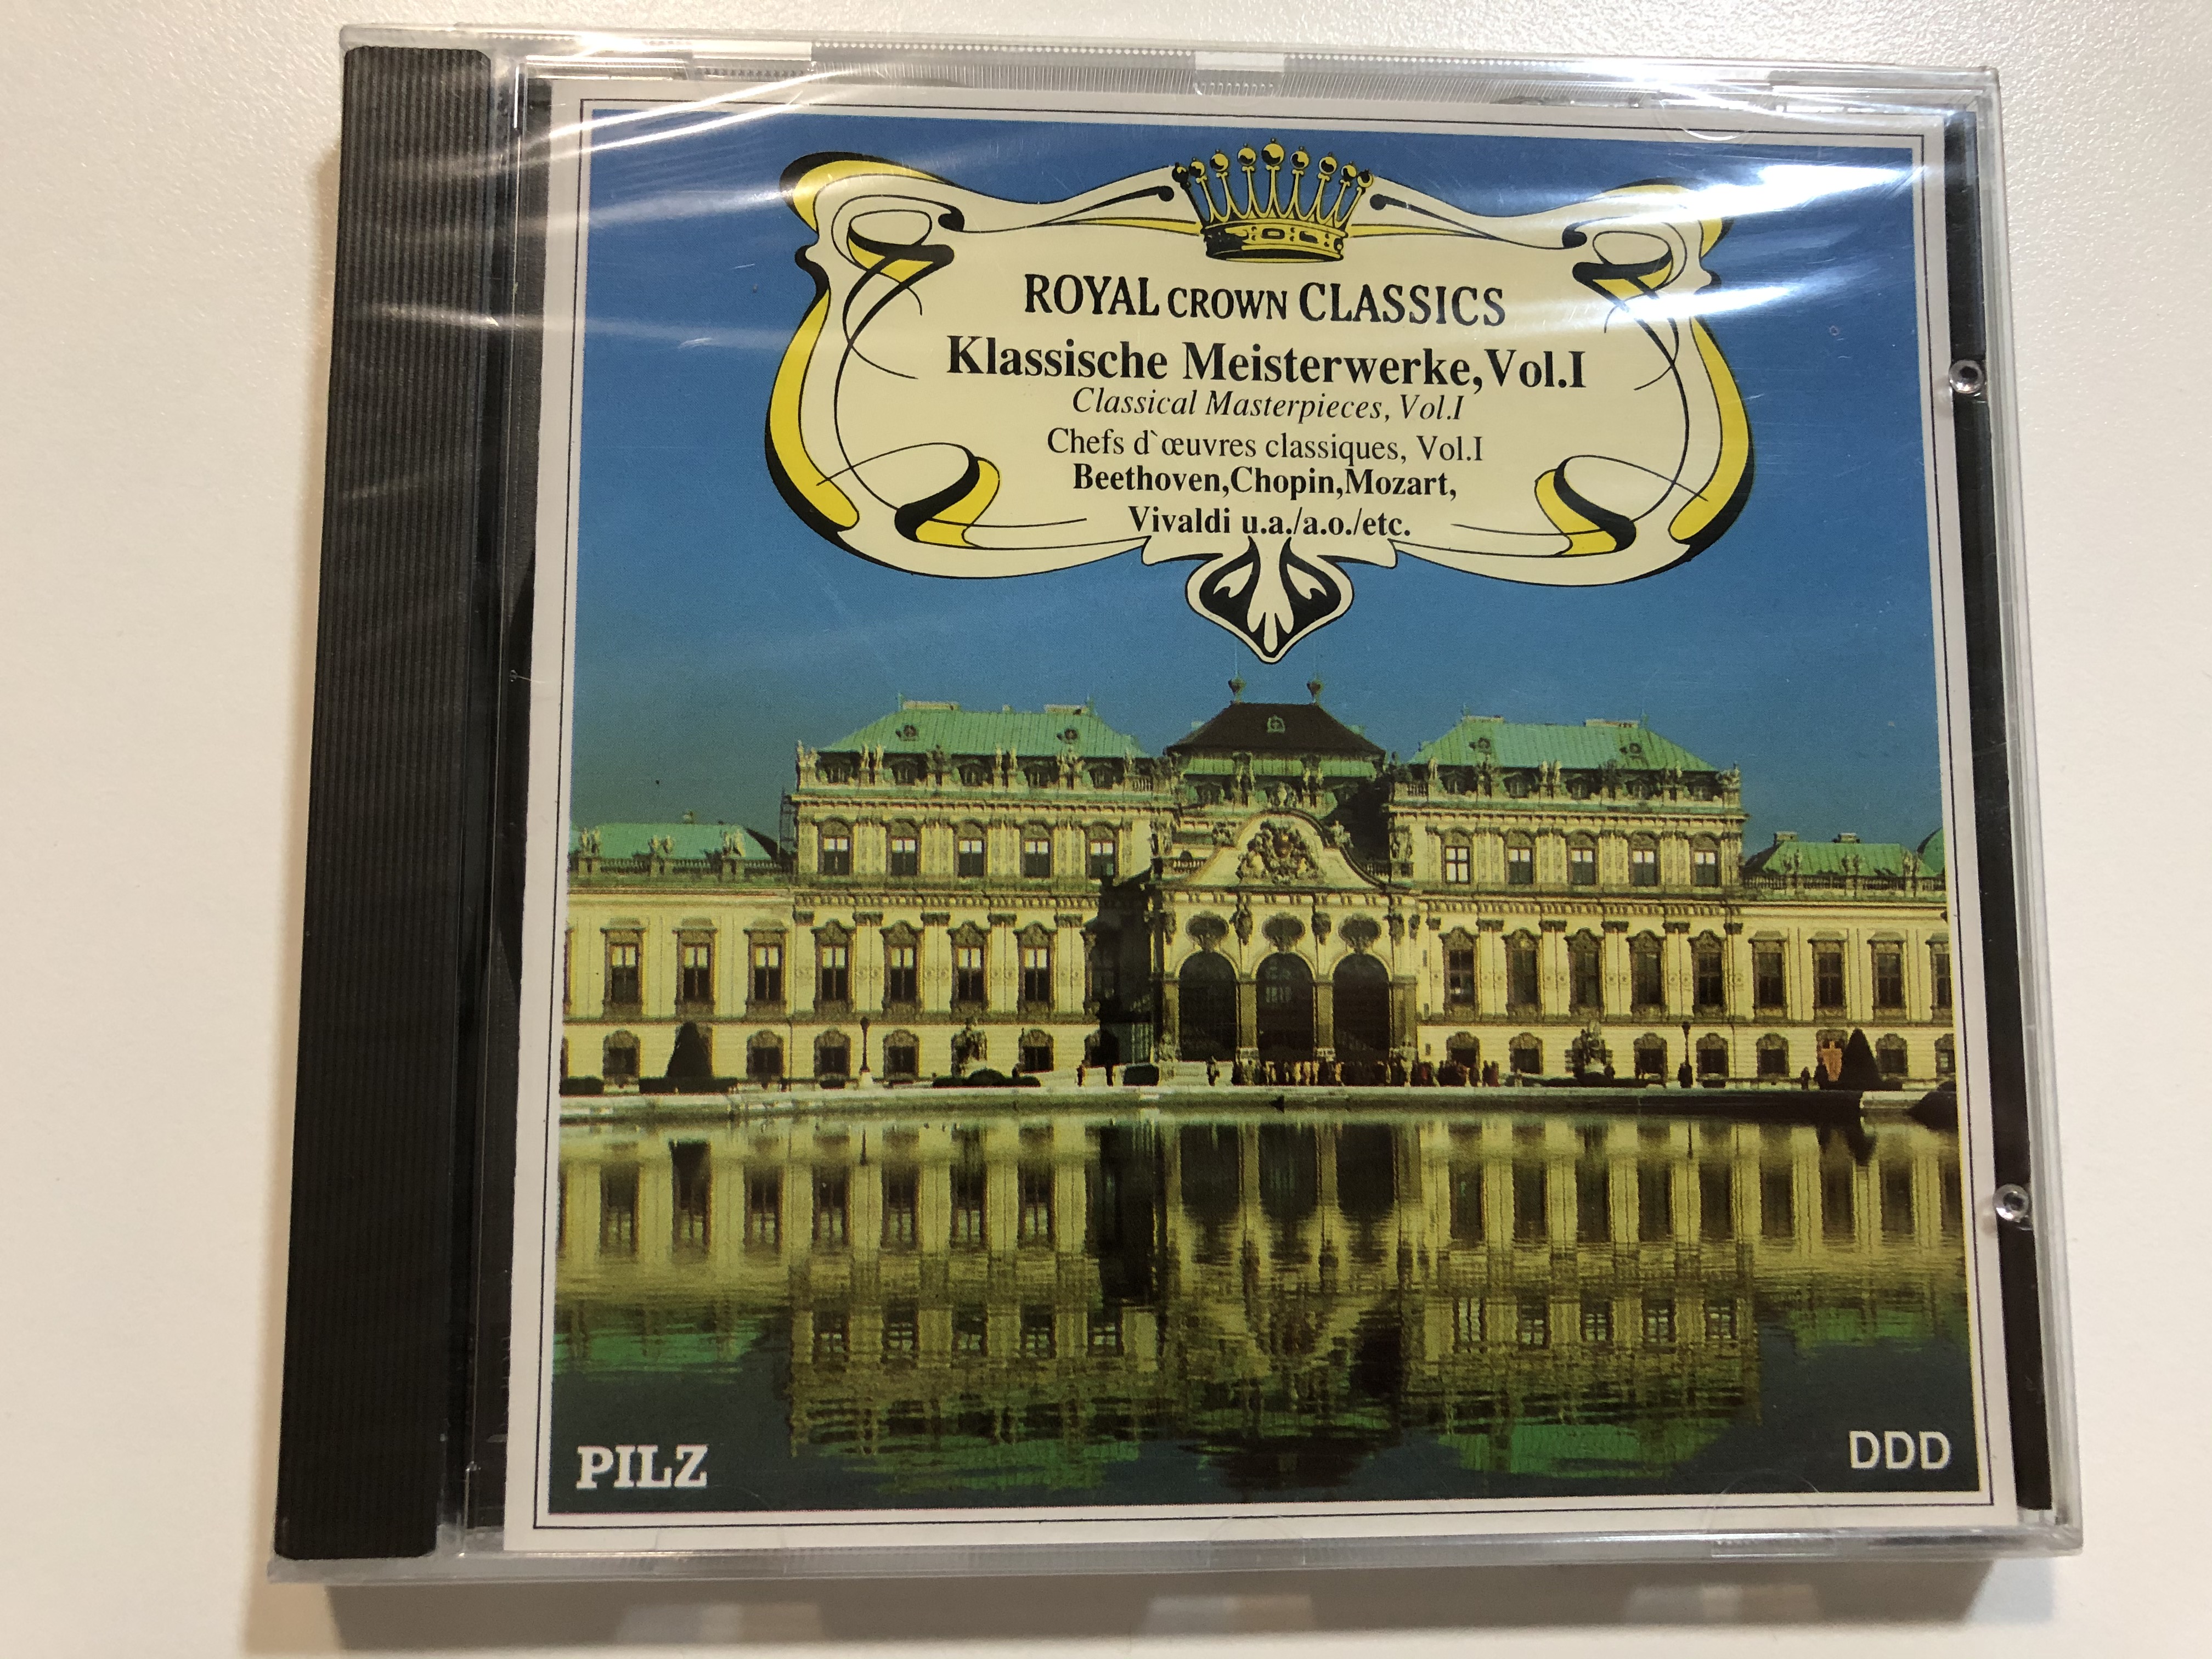 royal-crown-classics-klassische-meisterwerke-vol.-i-classical-masterpieces-vol.-1-chefs-d-ouvres-classiques-vol.-1-beethoven-chopin-mozart-vivaldi-u.a.a.o.etc.-pilz-audio-cd-cd-65-1-.jpg